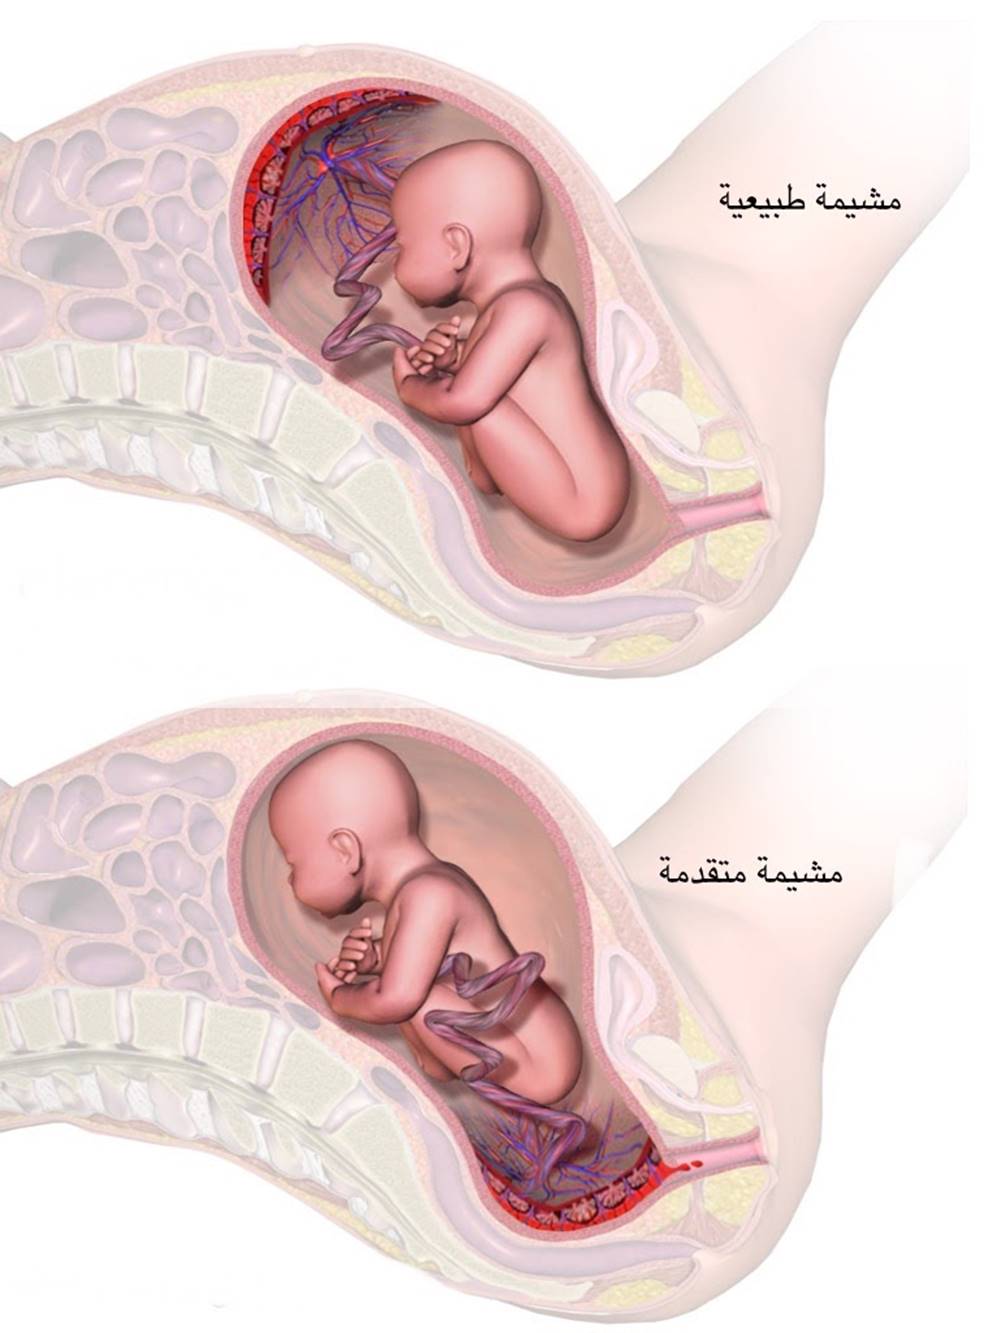 Плацента при беременности